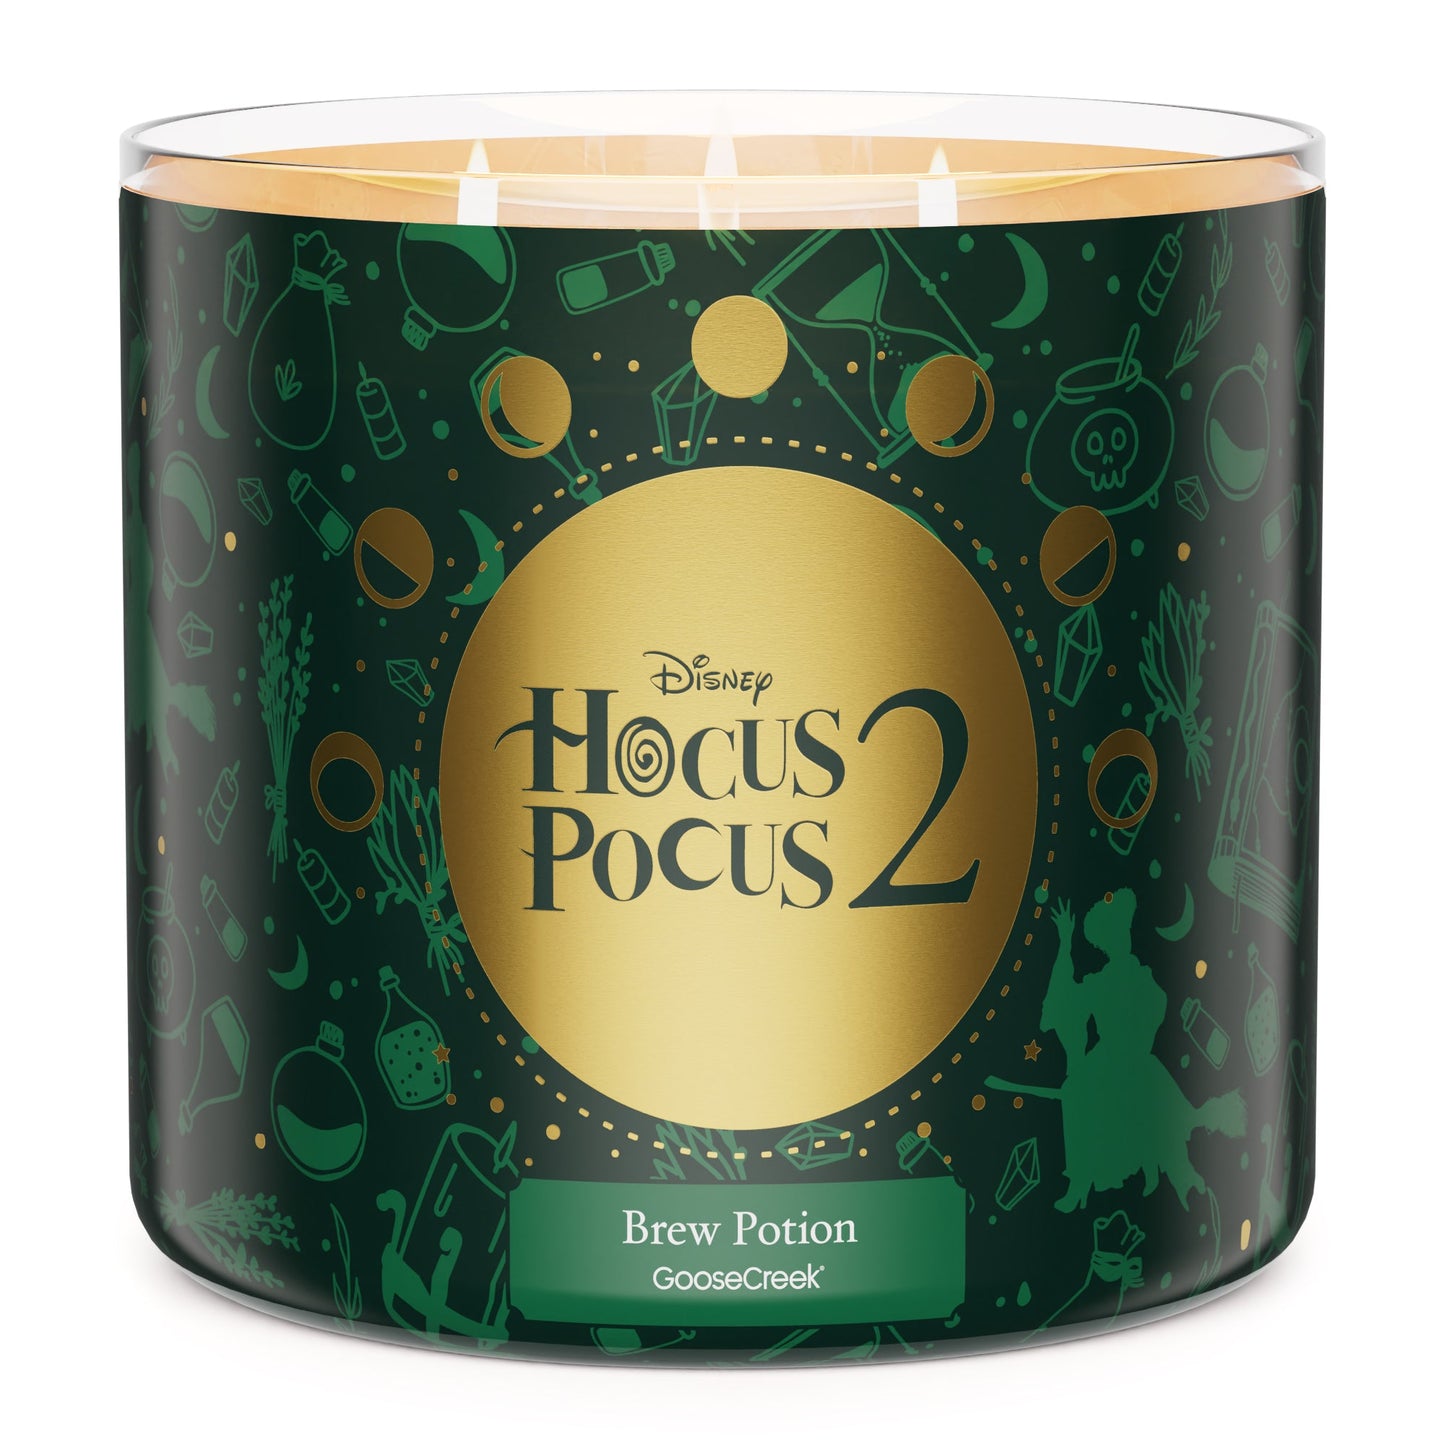 Brew Potion 3-Wick Hocus Pocus 2 Candle